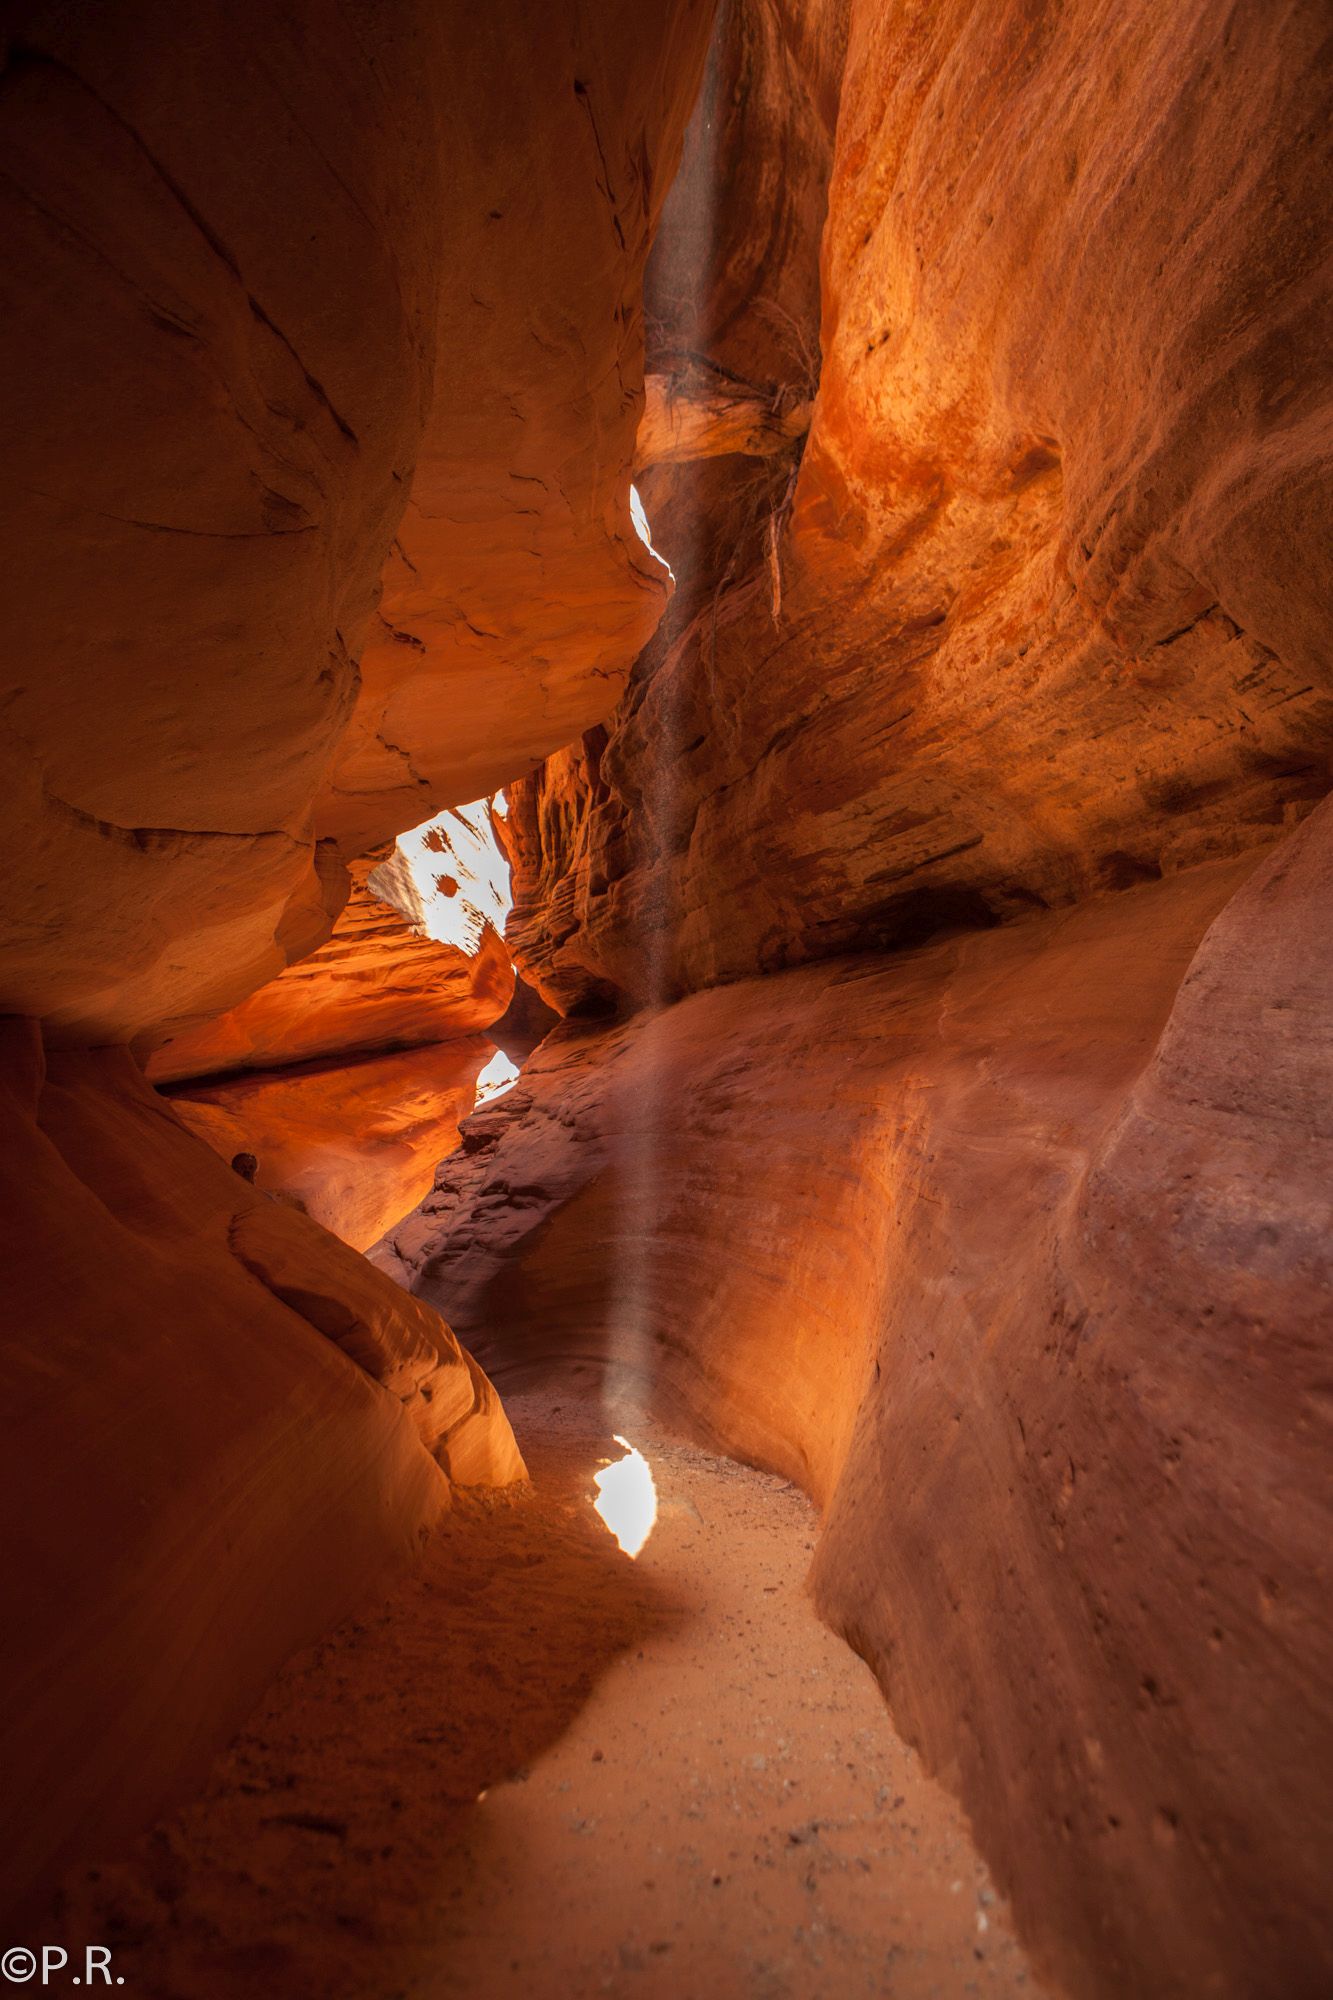 Slot canyon hummer adventures